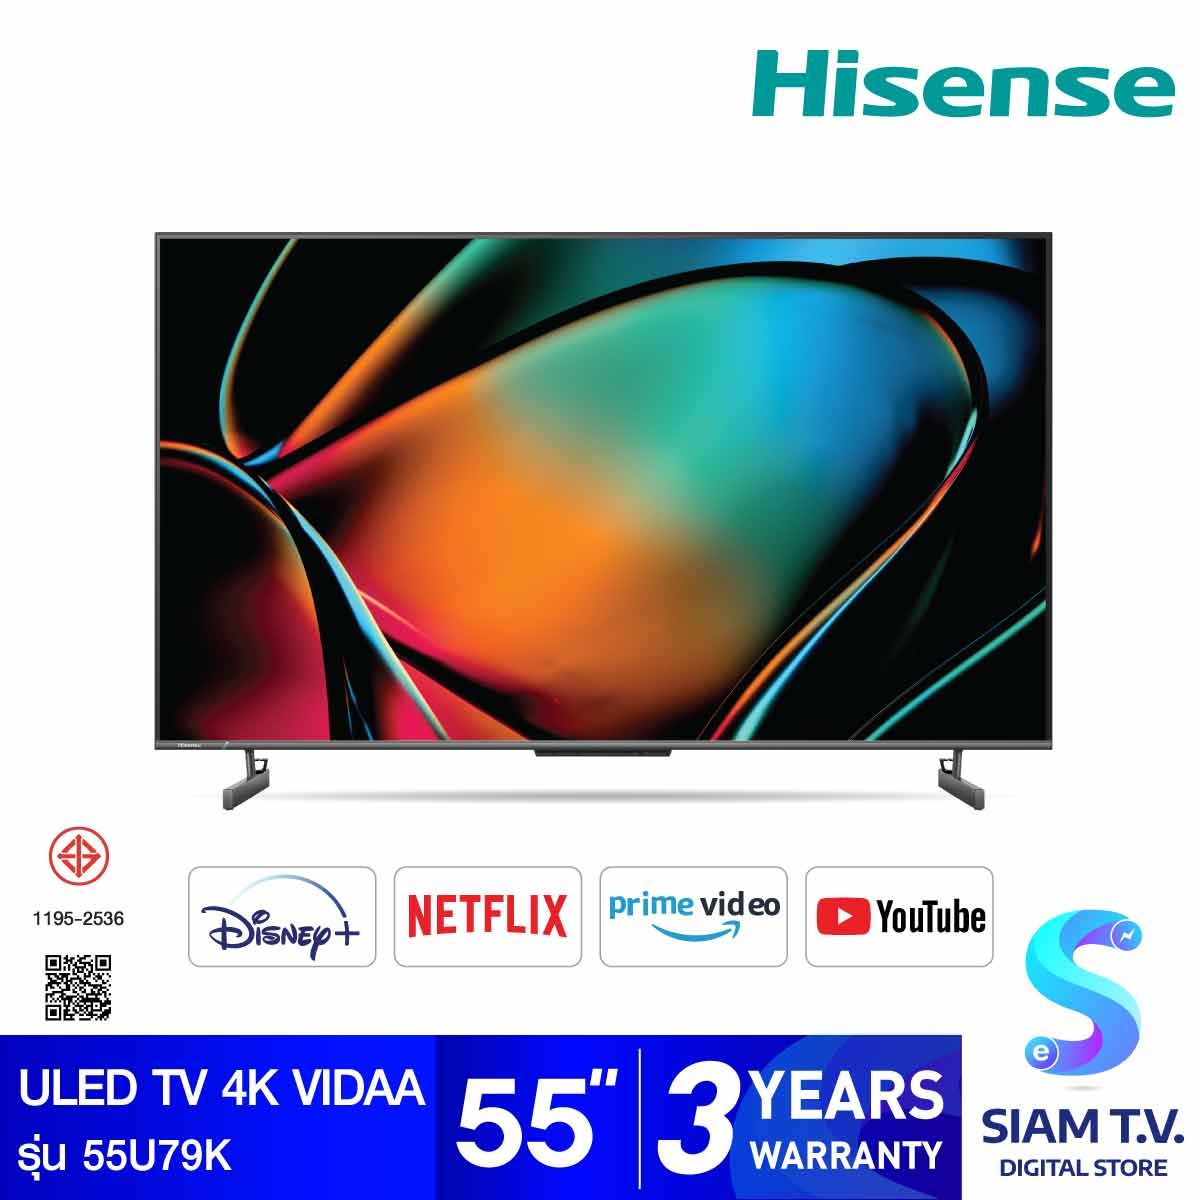 Hisense ULED TV 4K VIDAA 144 Hzรุ่น 55U79K สมาร์ททีวี 4K ขนาด 55 นิ้ว